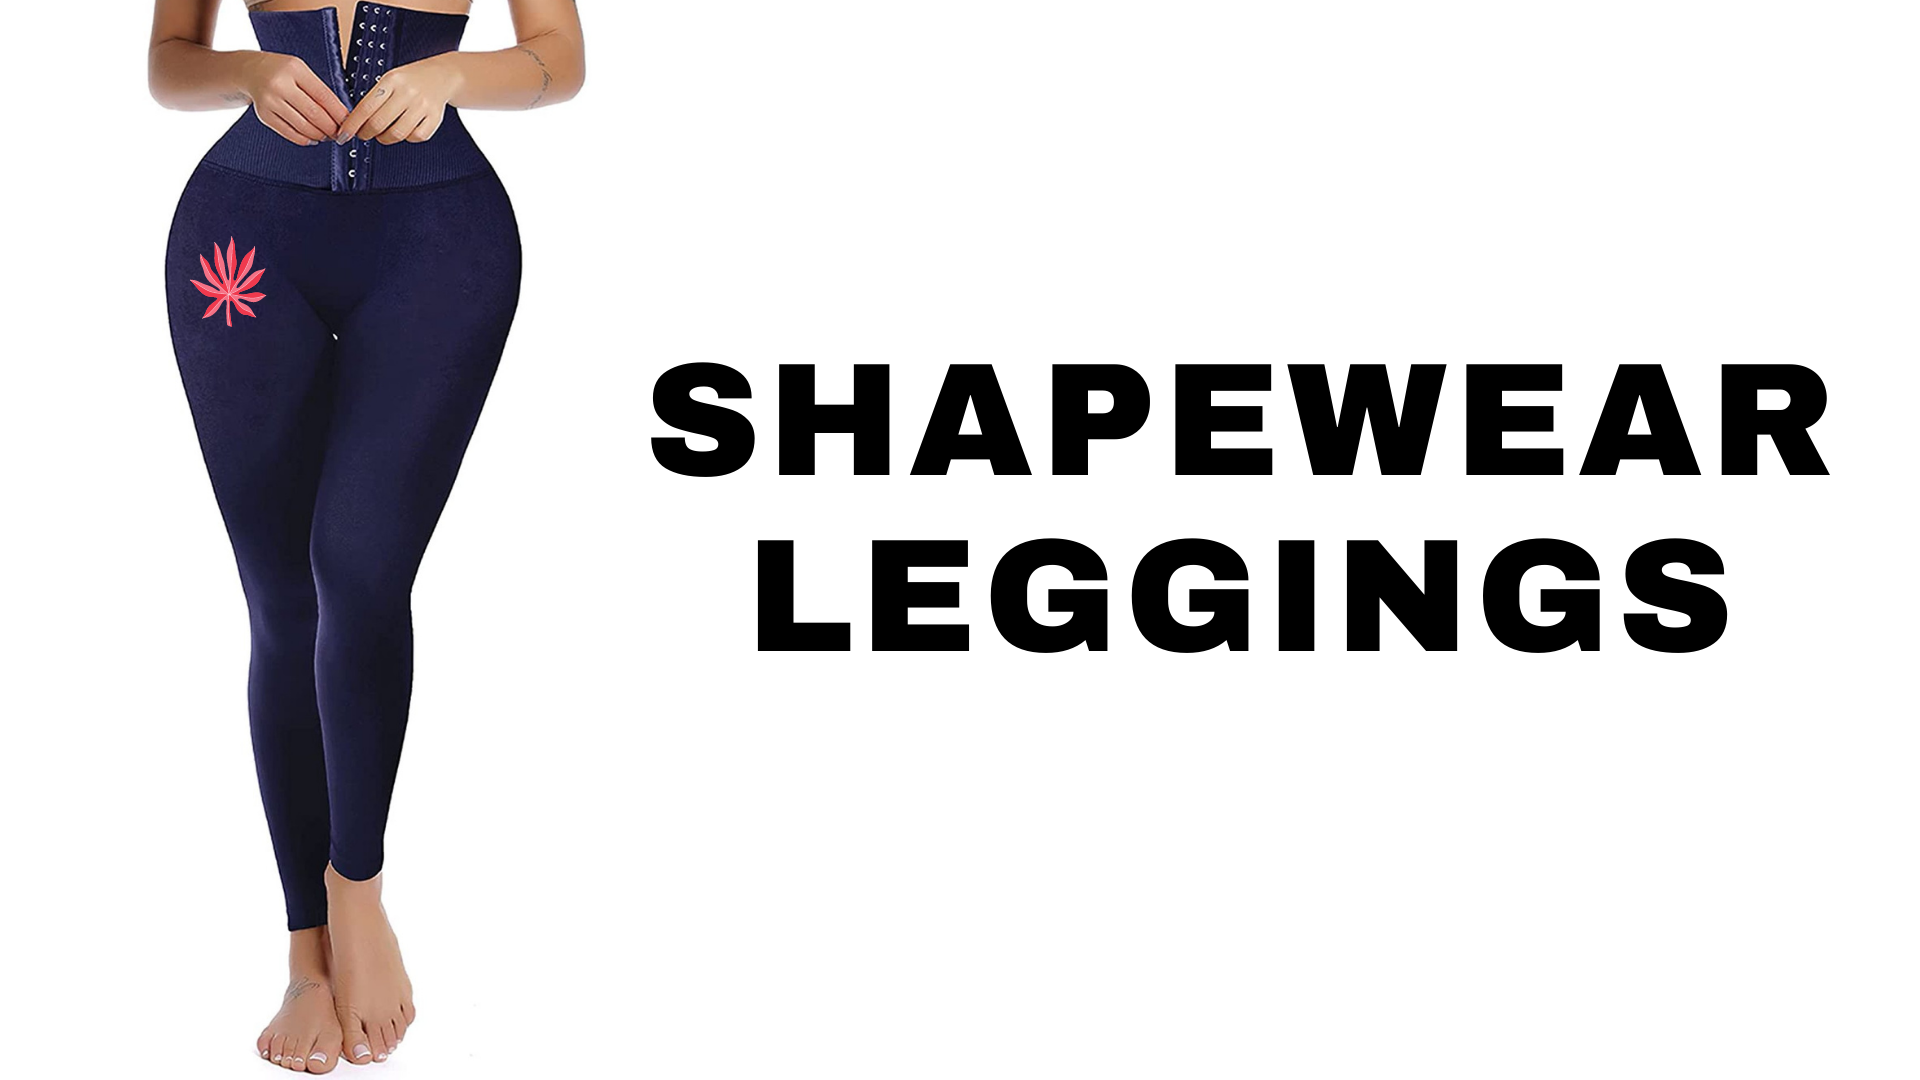 Shapewear leggings